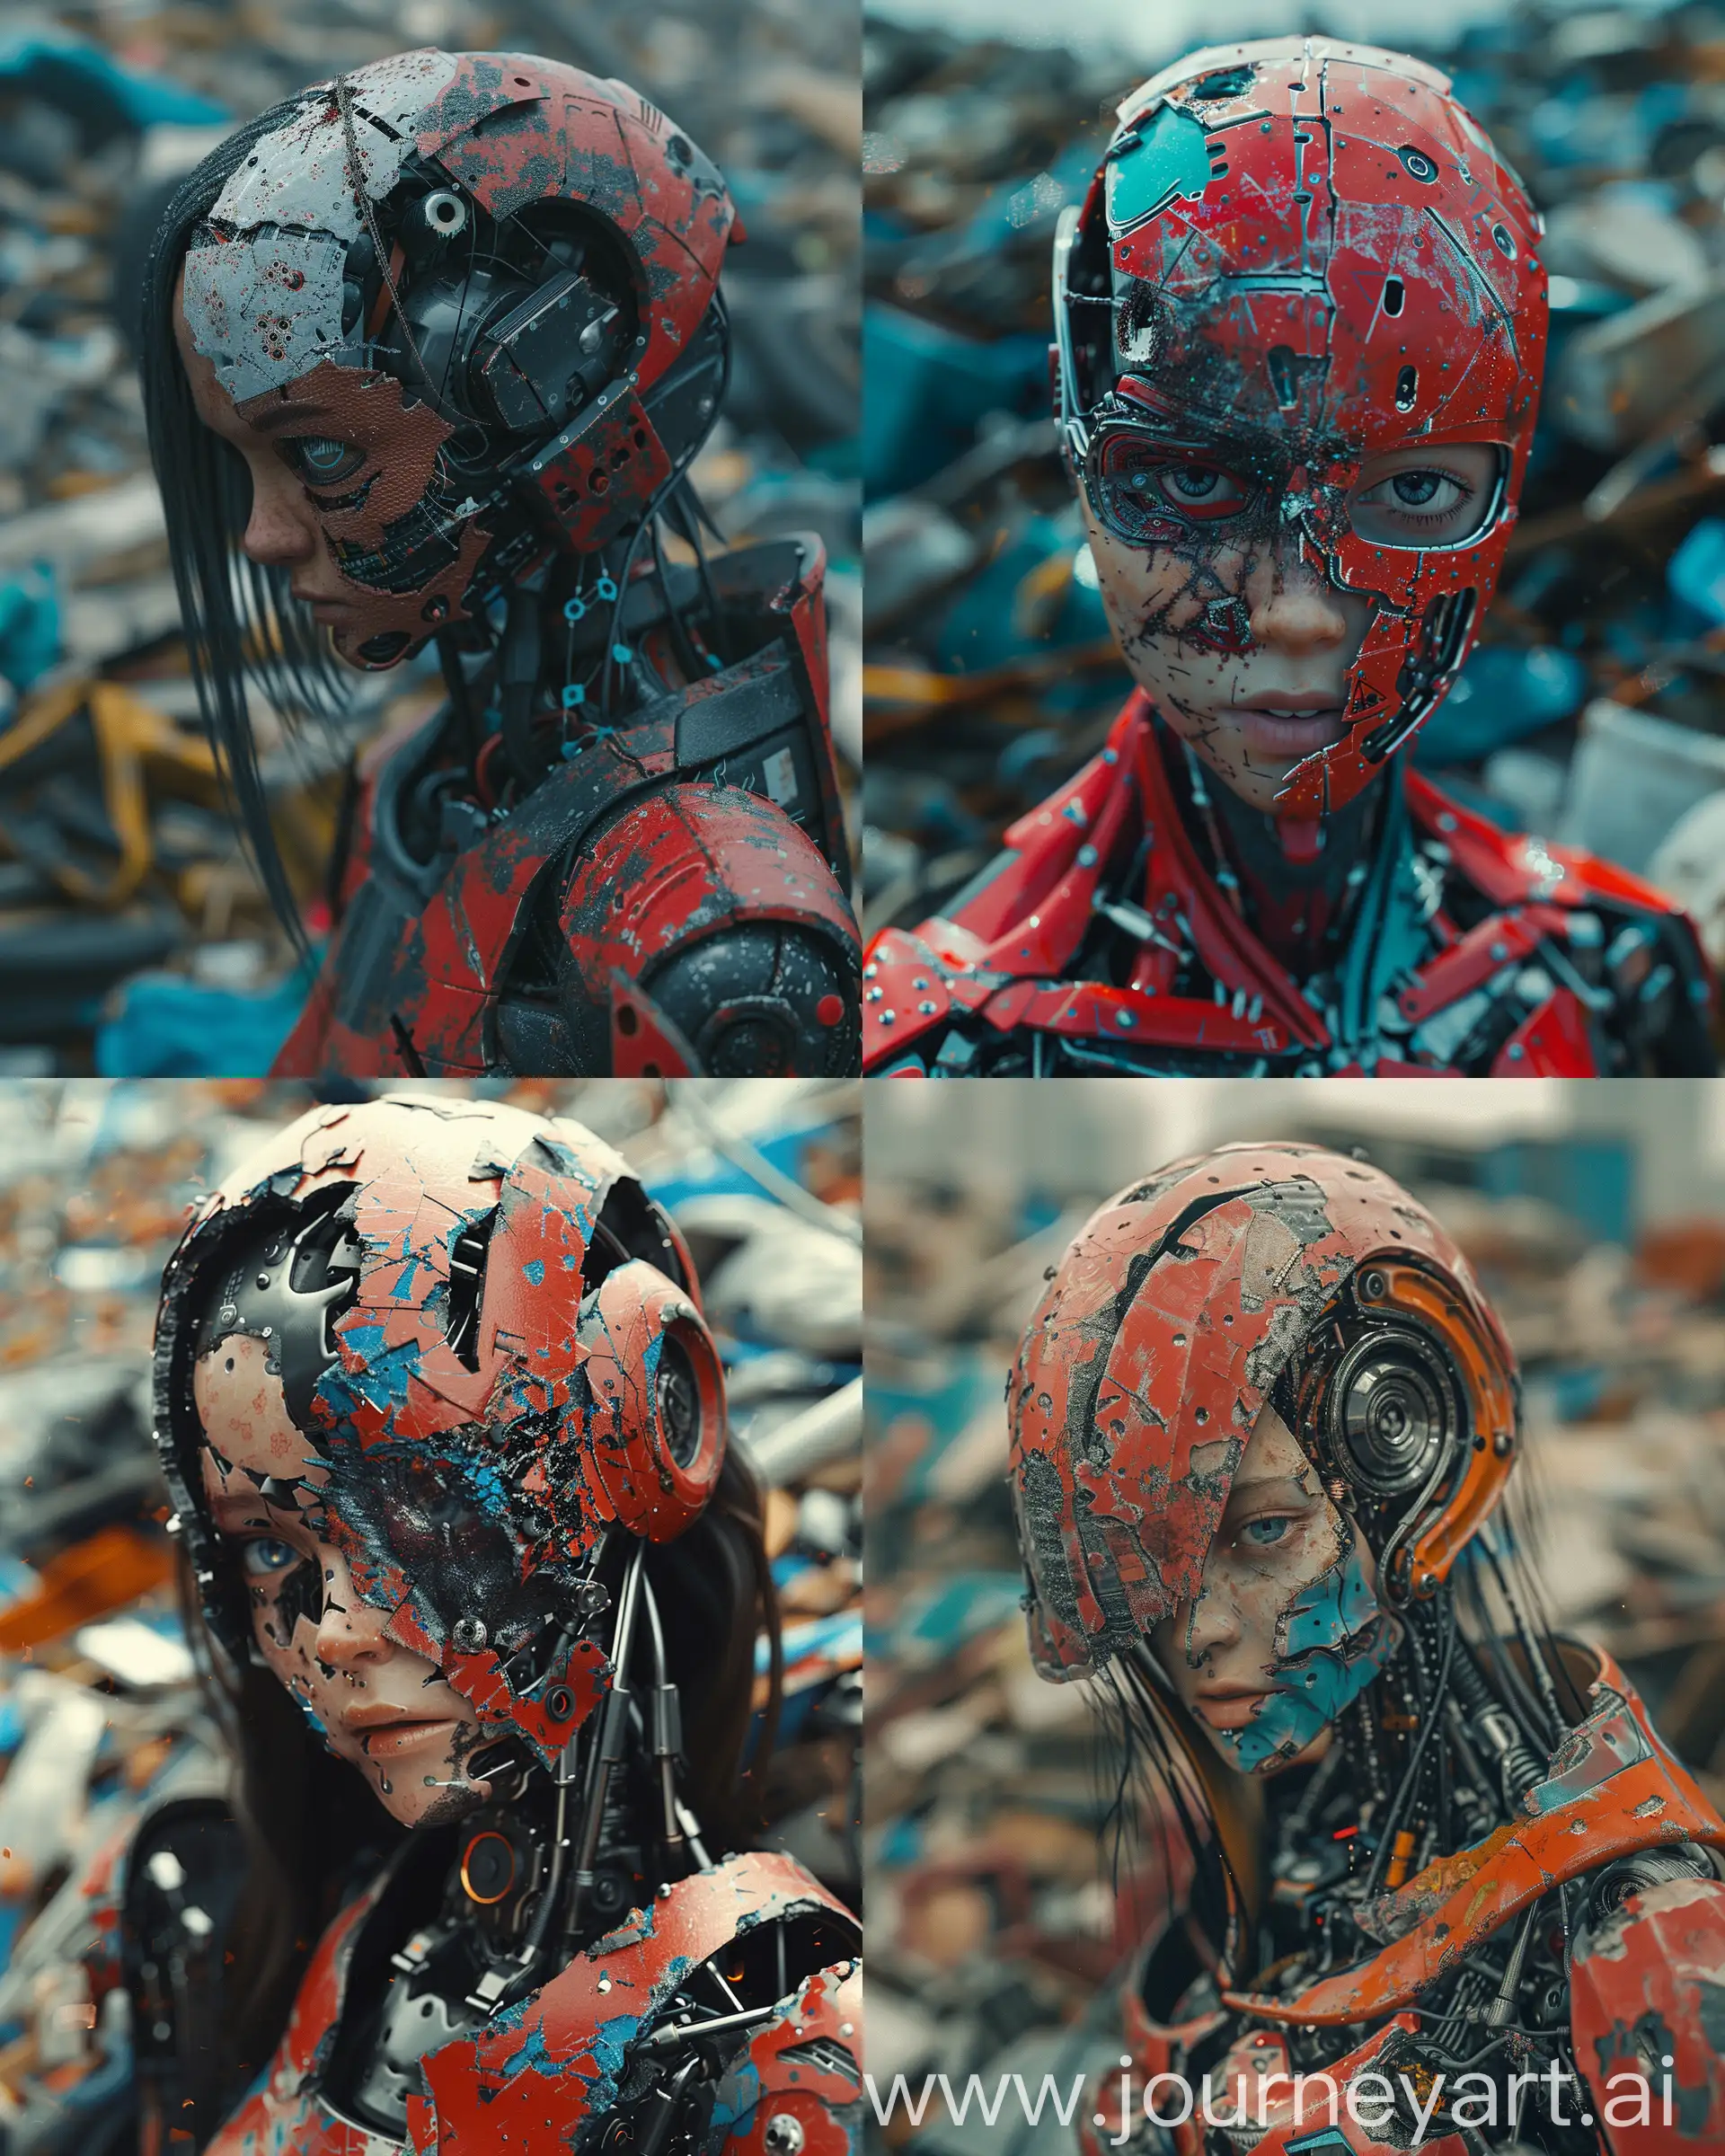 Broken-Cyborg-Girl-in-Desolate-Landfill-Hyperpunk-Scene-with-Vibrant-Colors